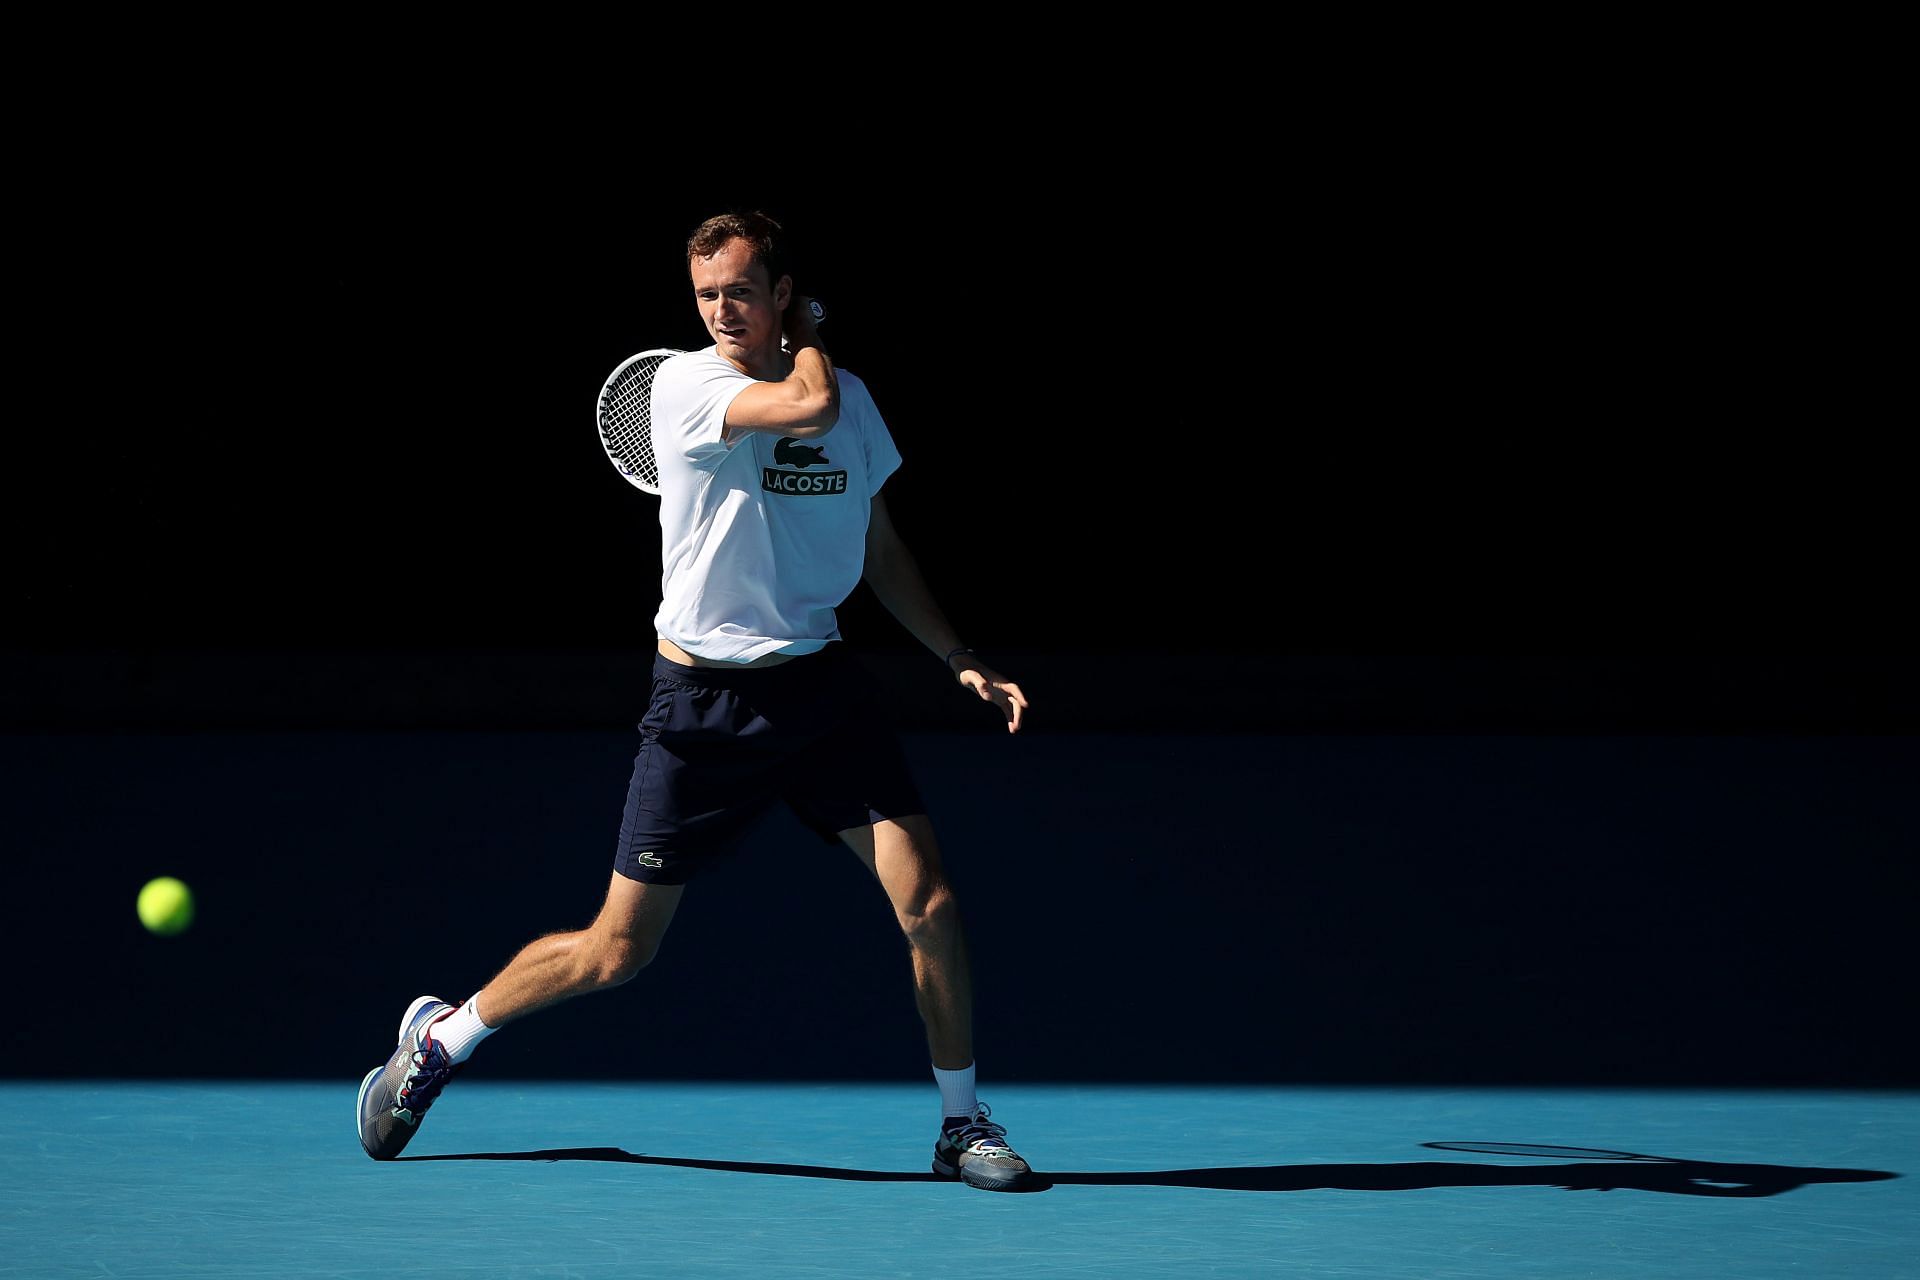 Medvedev is among the favorites for the Australian Open